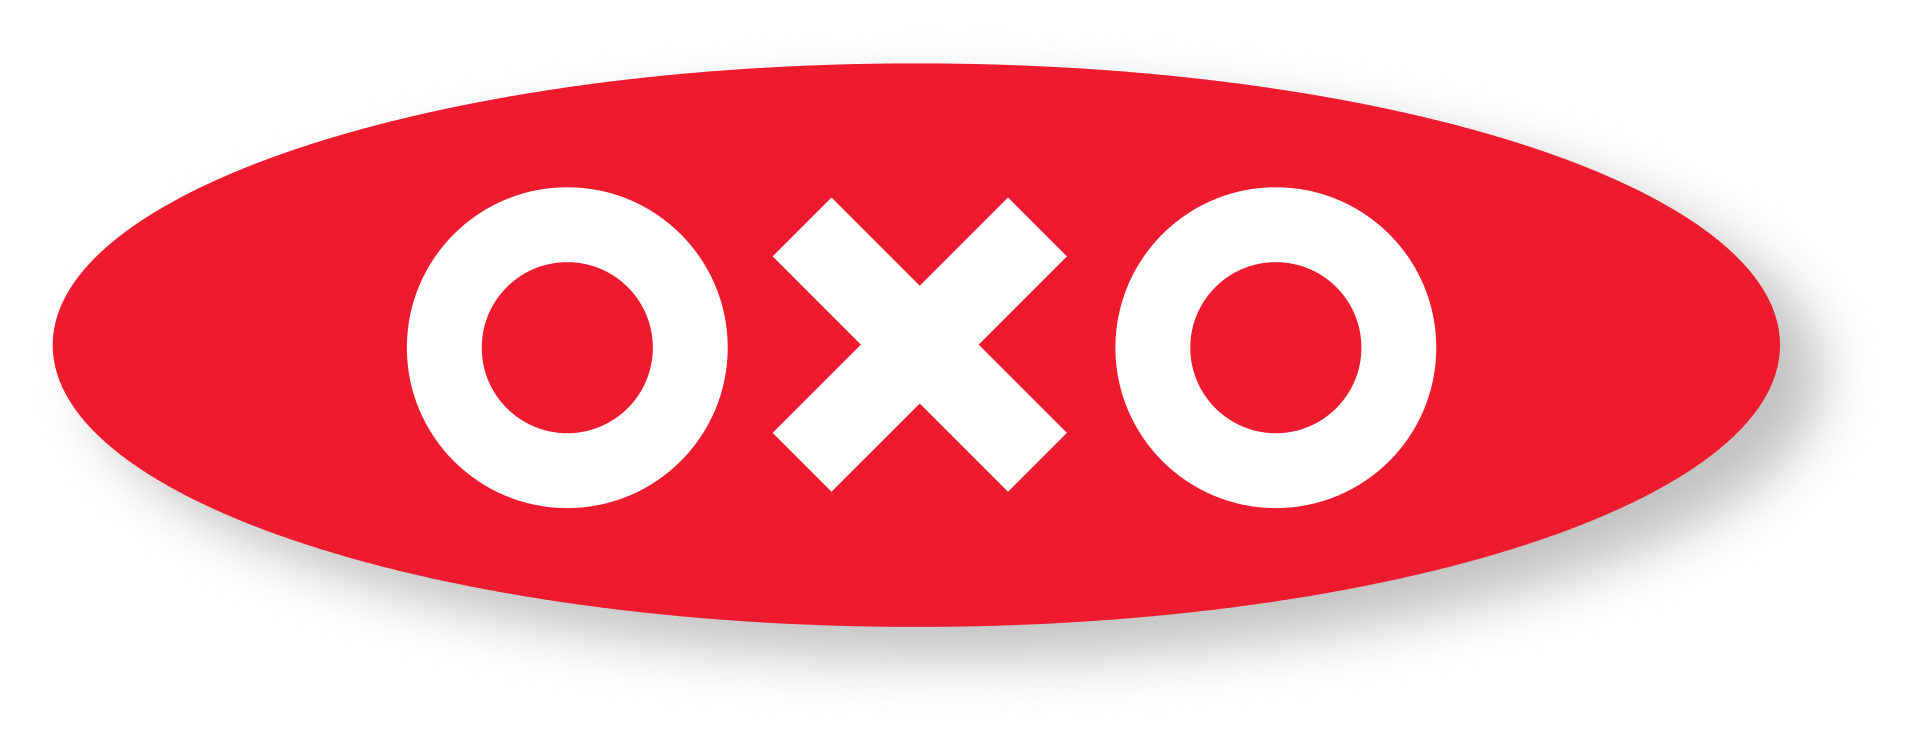 Brand logo of OXO, a kitchen utensils brand